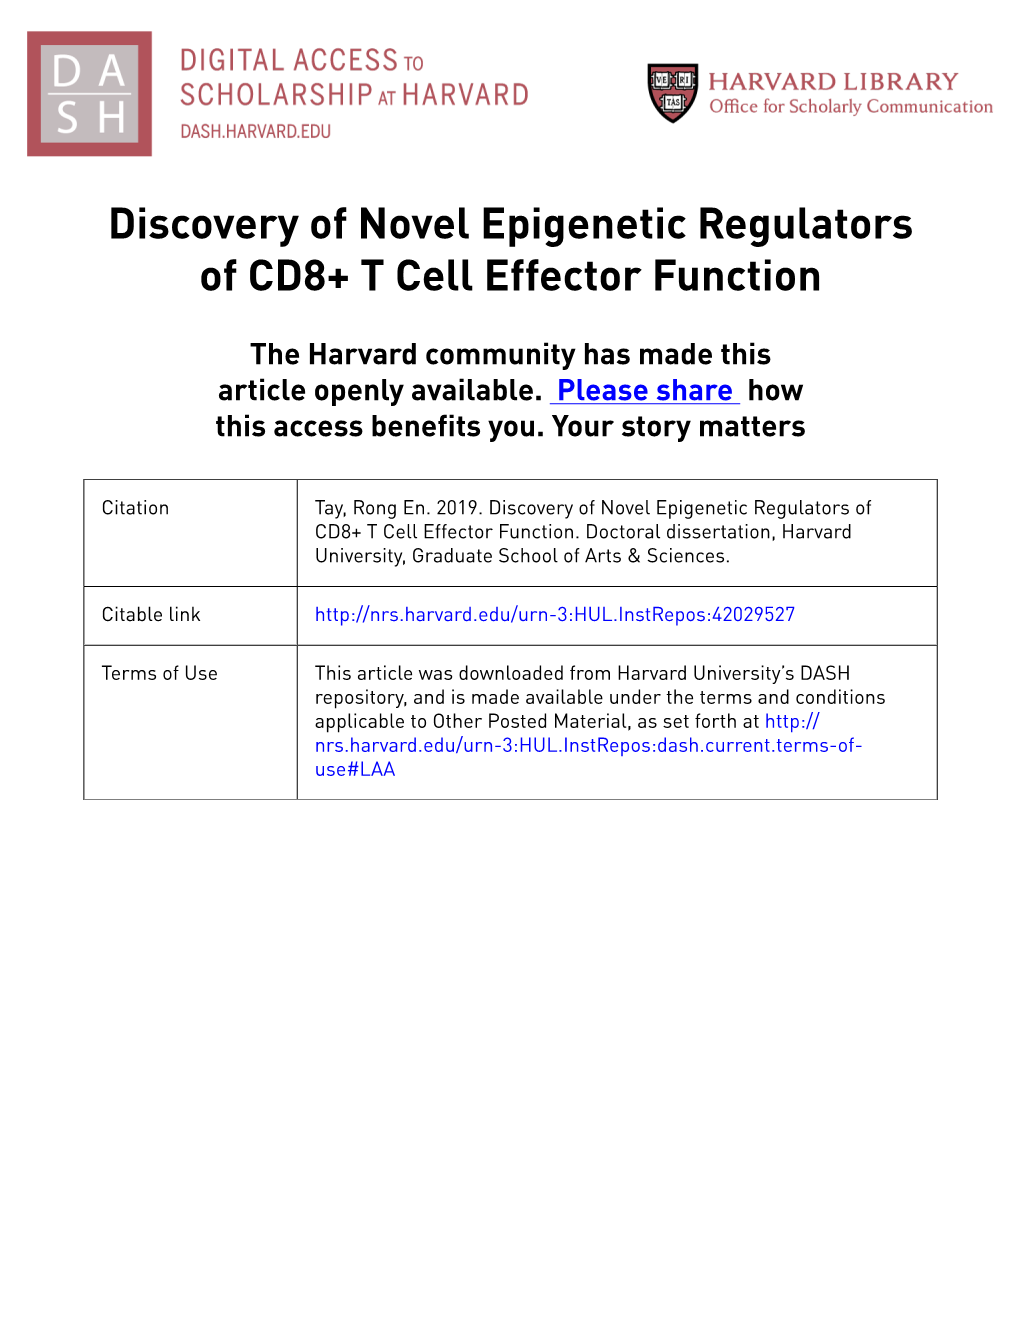 Discovery of Novel Epigenetic Regulators of CD8+ T Cell Effector Function